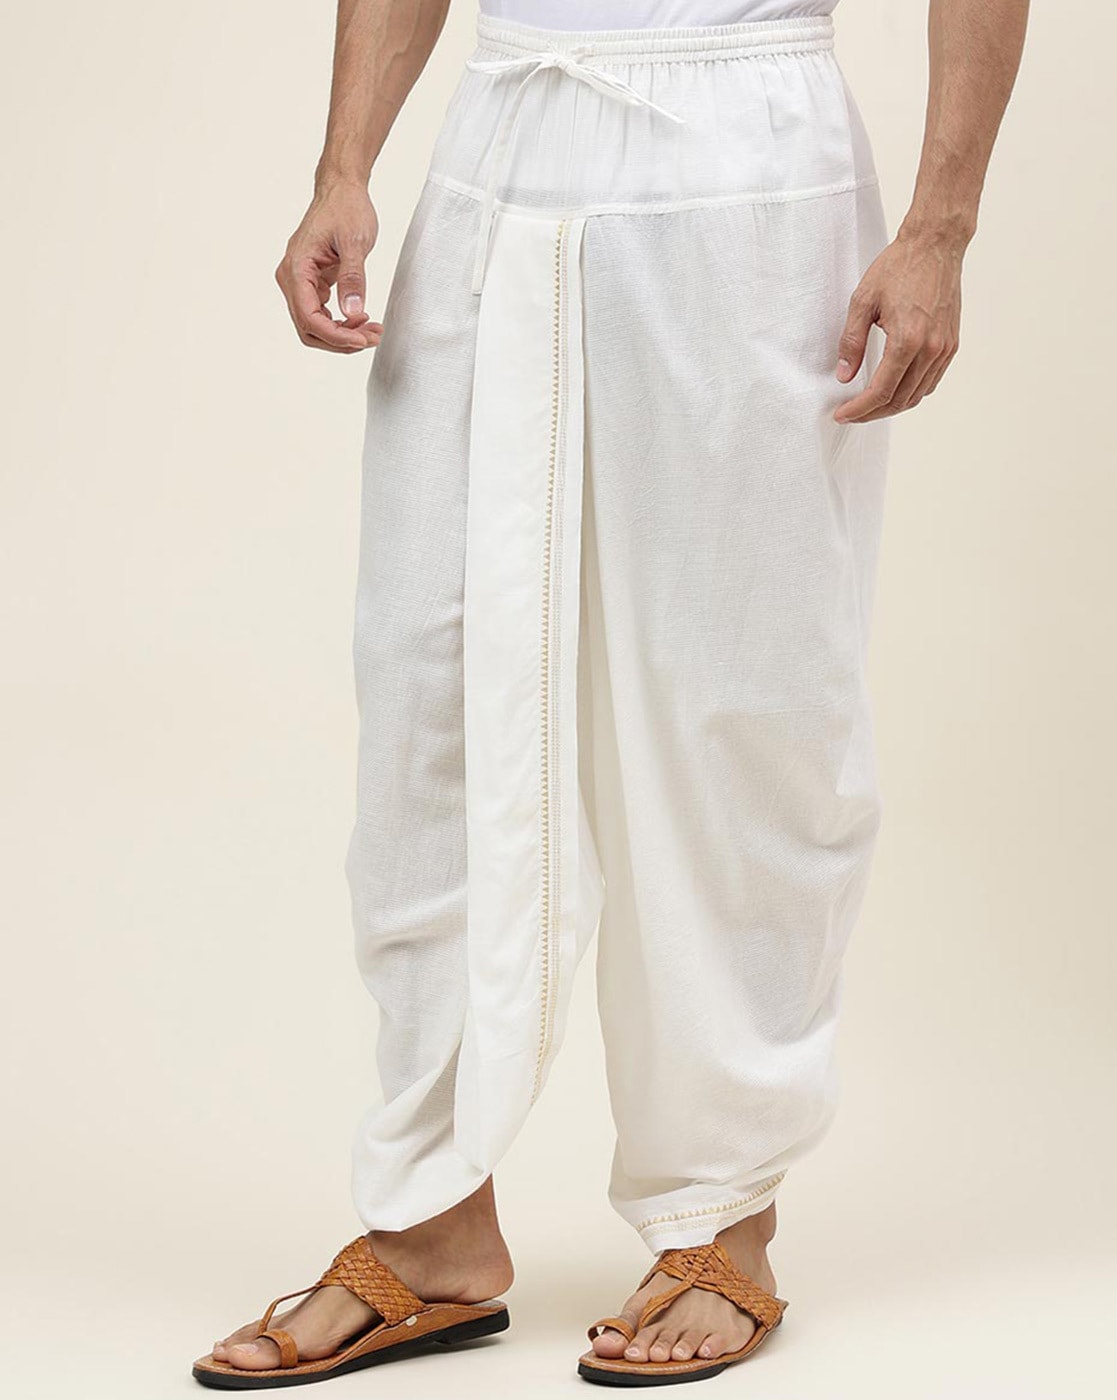 Fabindia White Cotton Embroidered Dhoti Pants